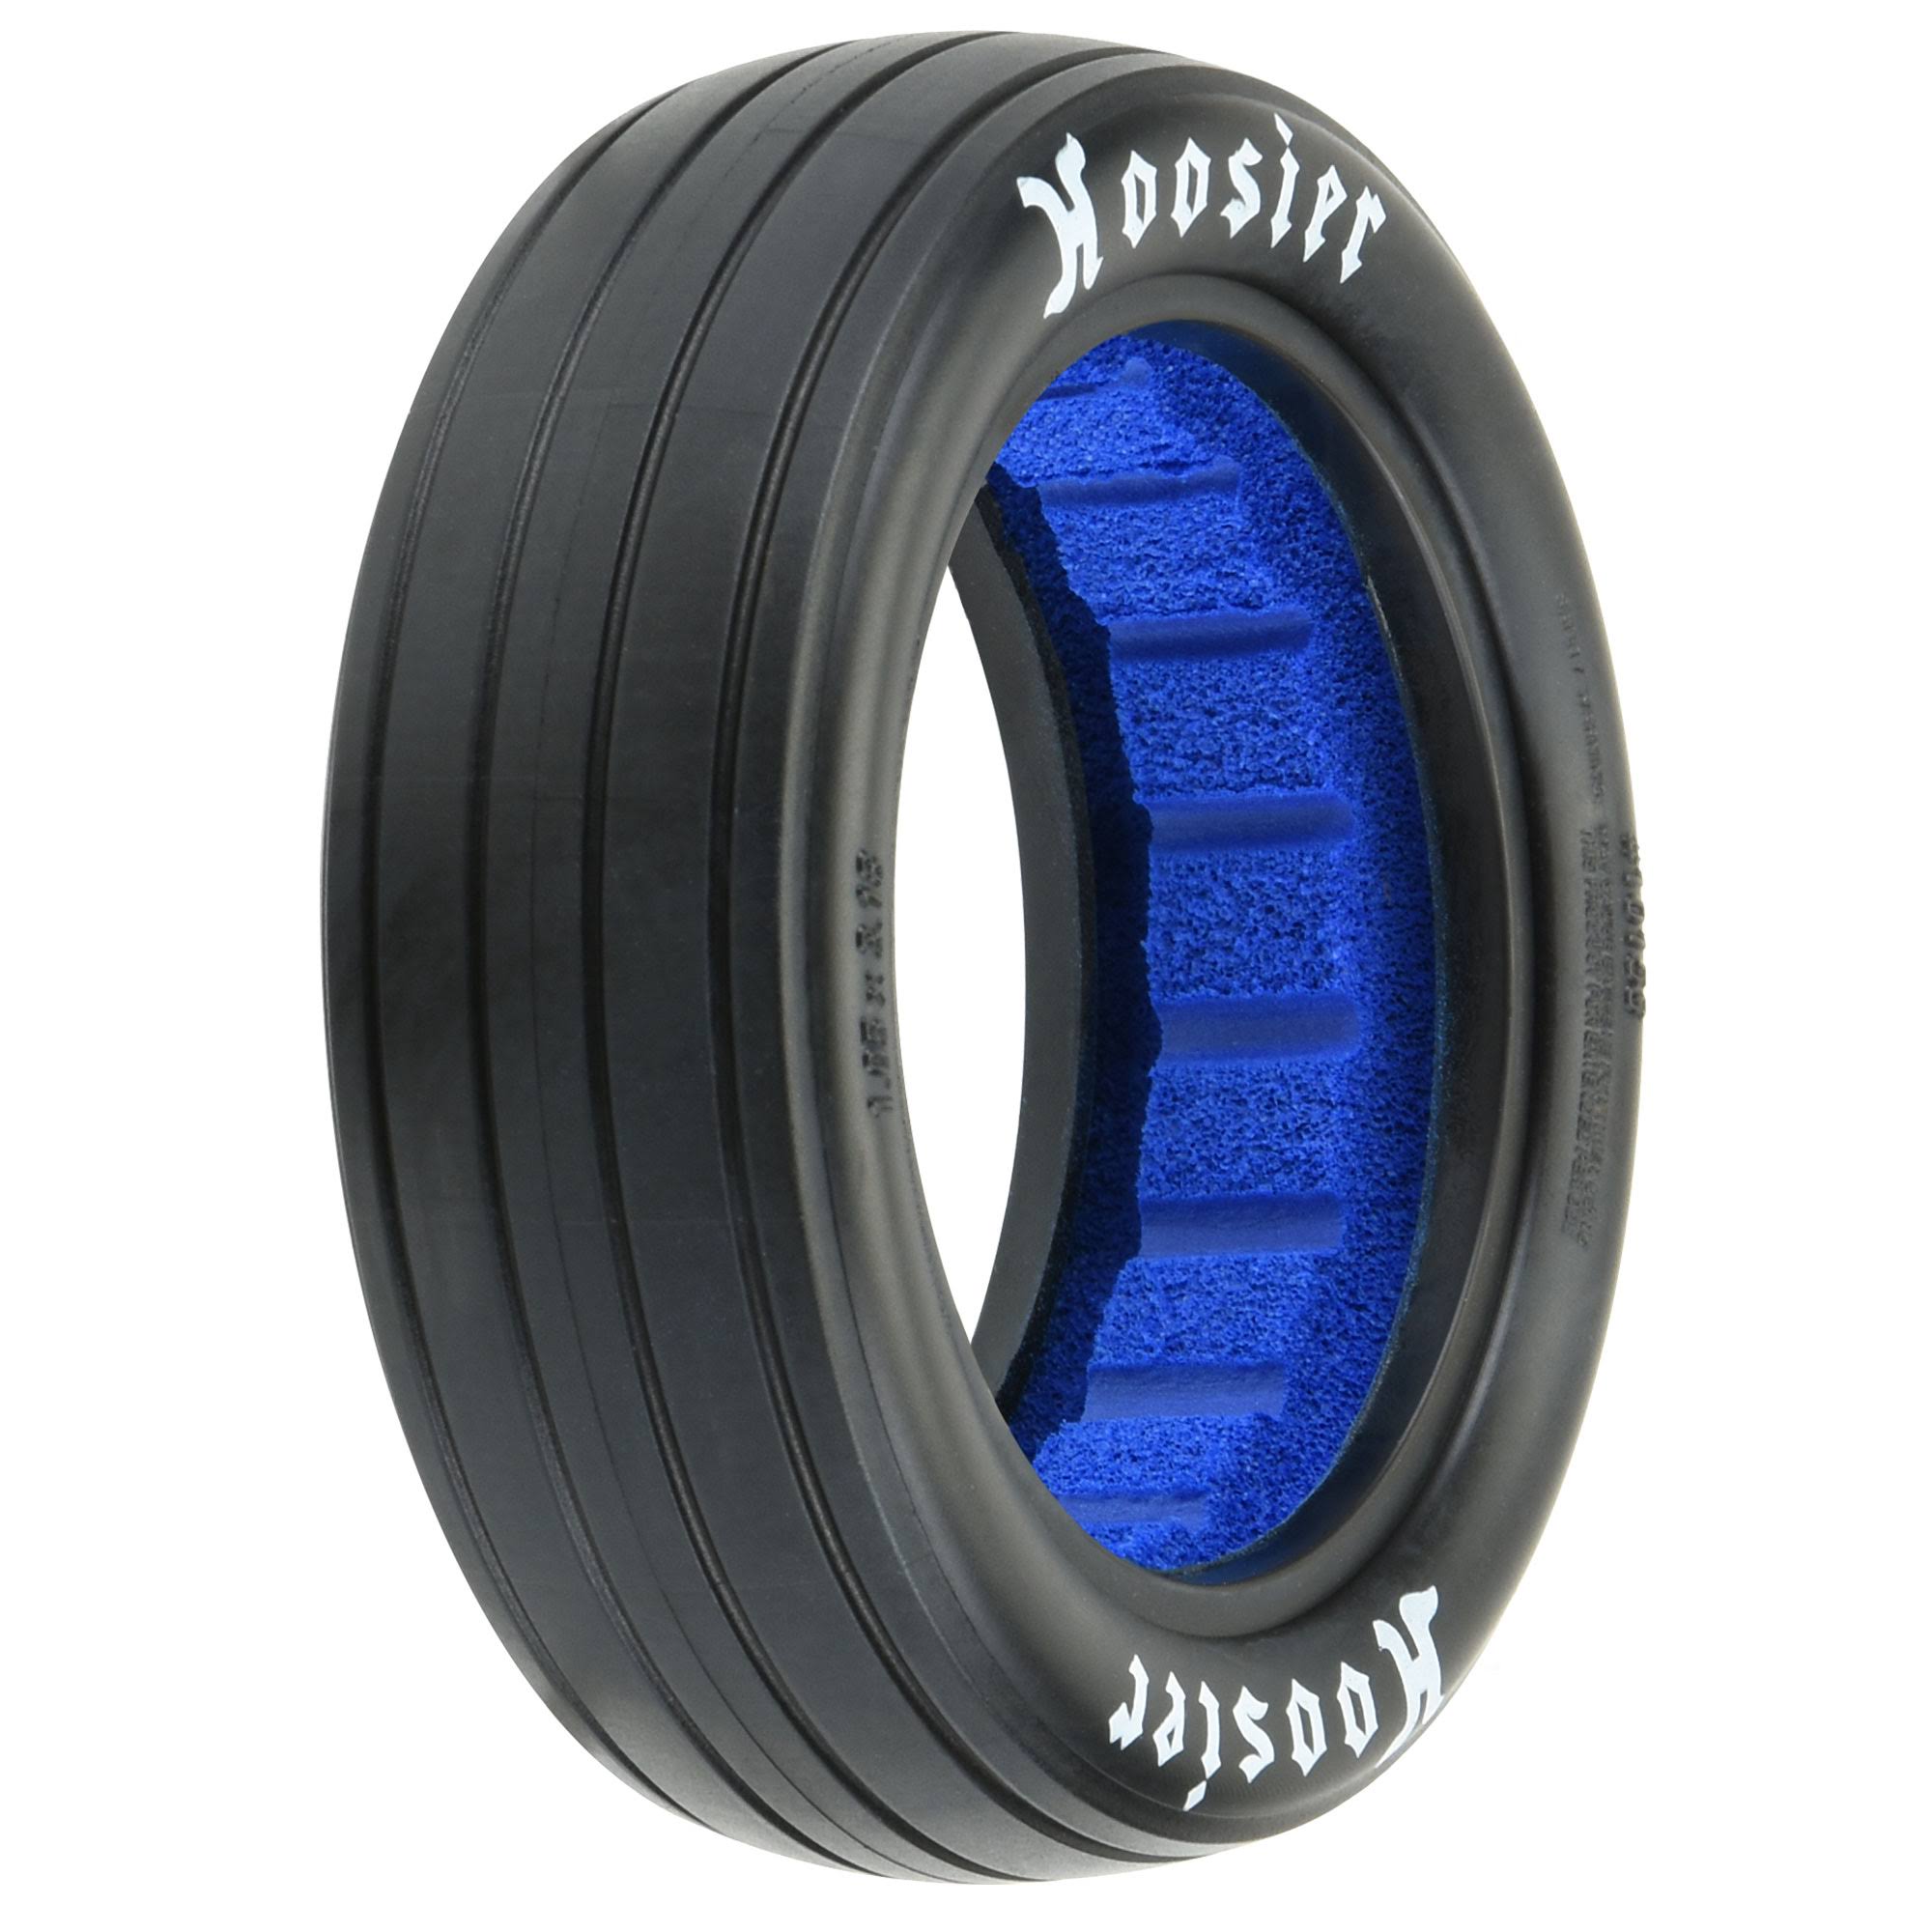 Pro-Line Hoosier Drag 2.2" Front Tires (2) (MC)